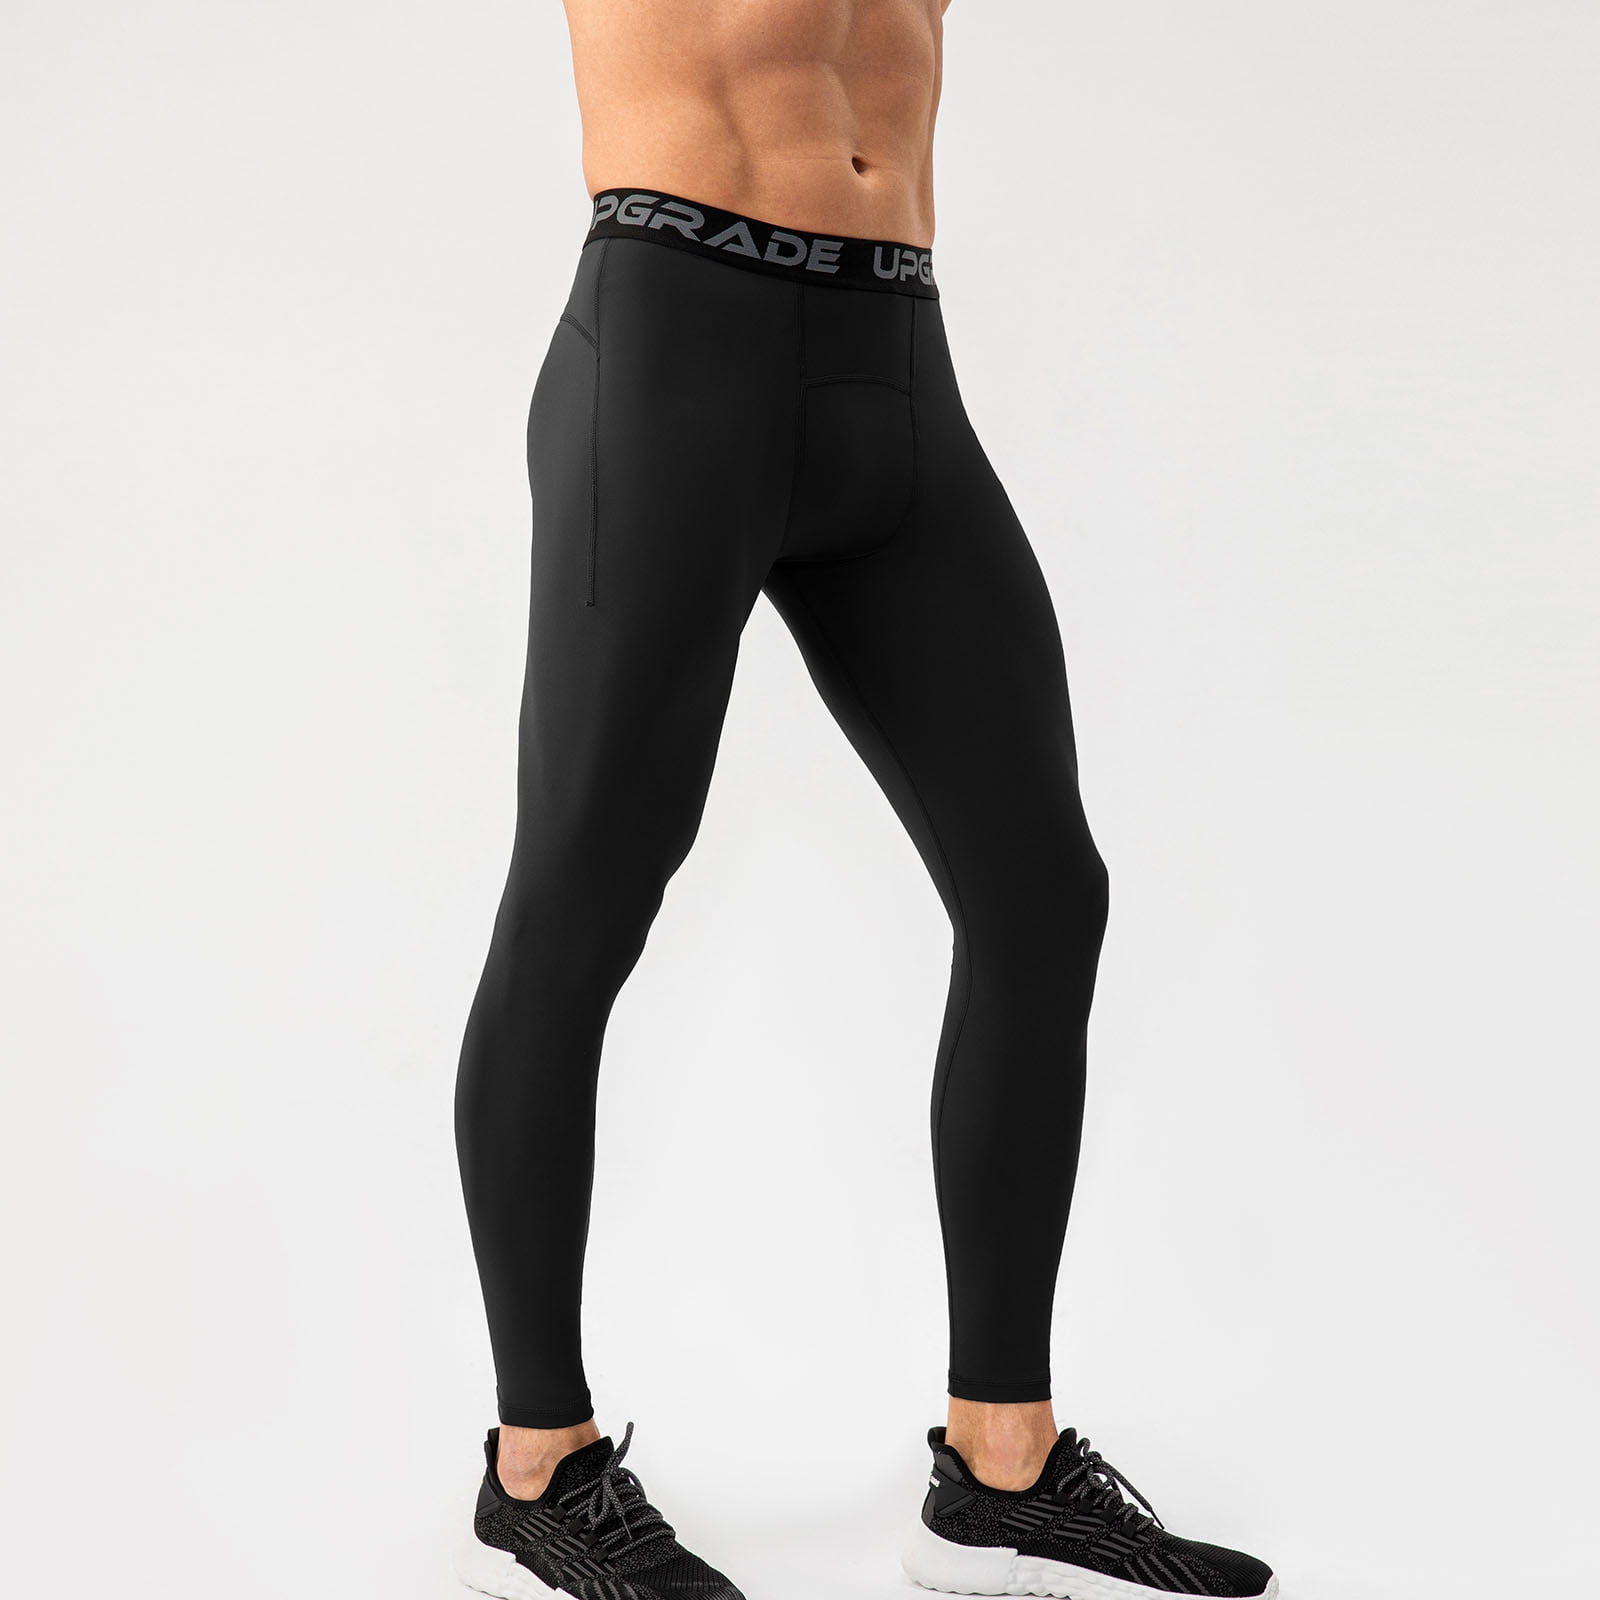 Lilgiuy Men's Quick Drying Yoga Pants Sports High Elastic Tights